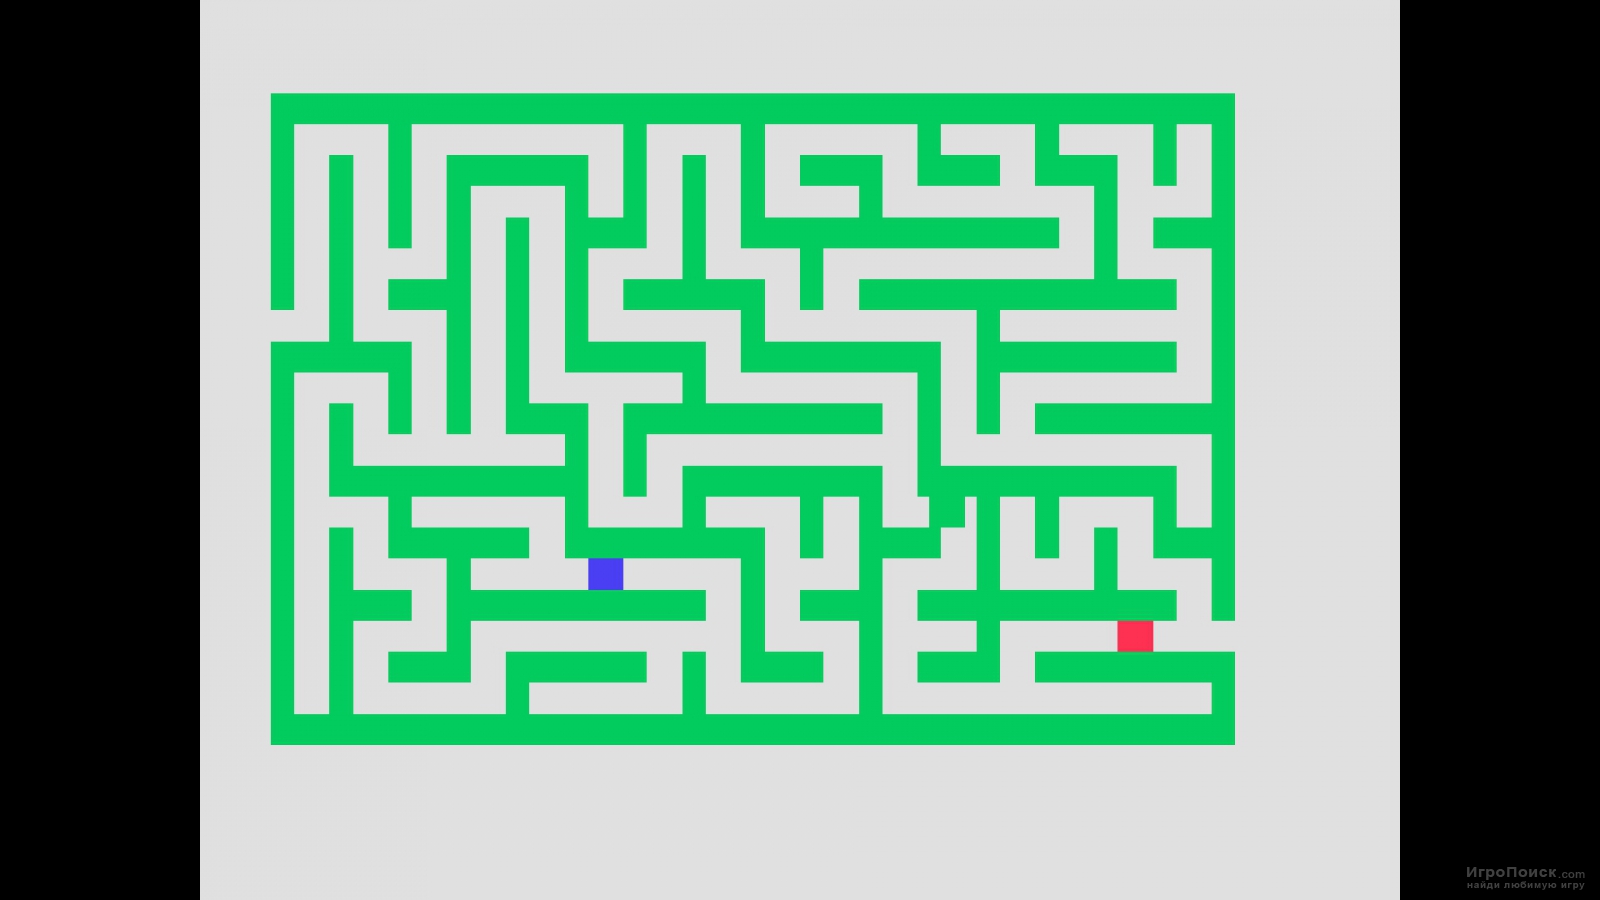    Maze